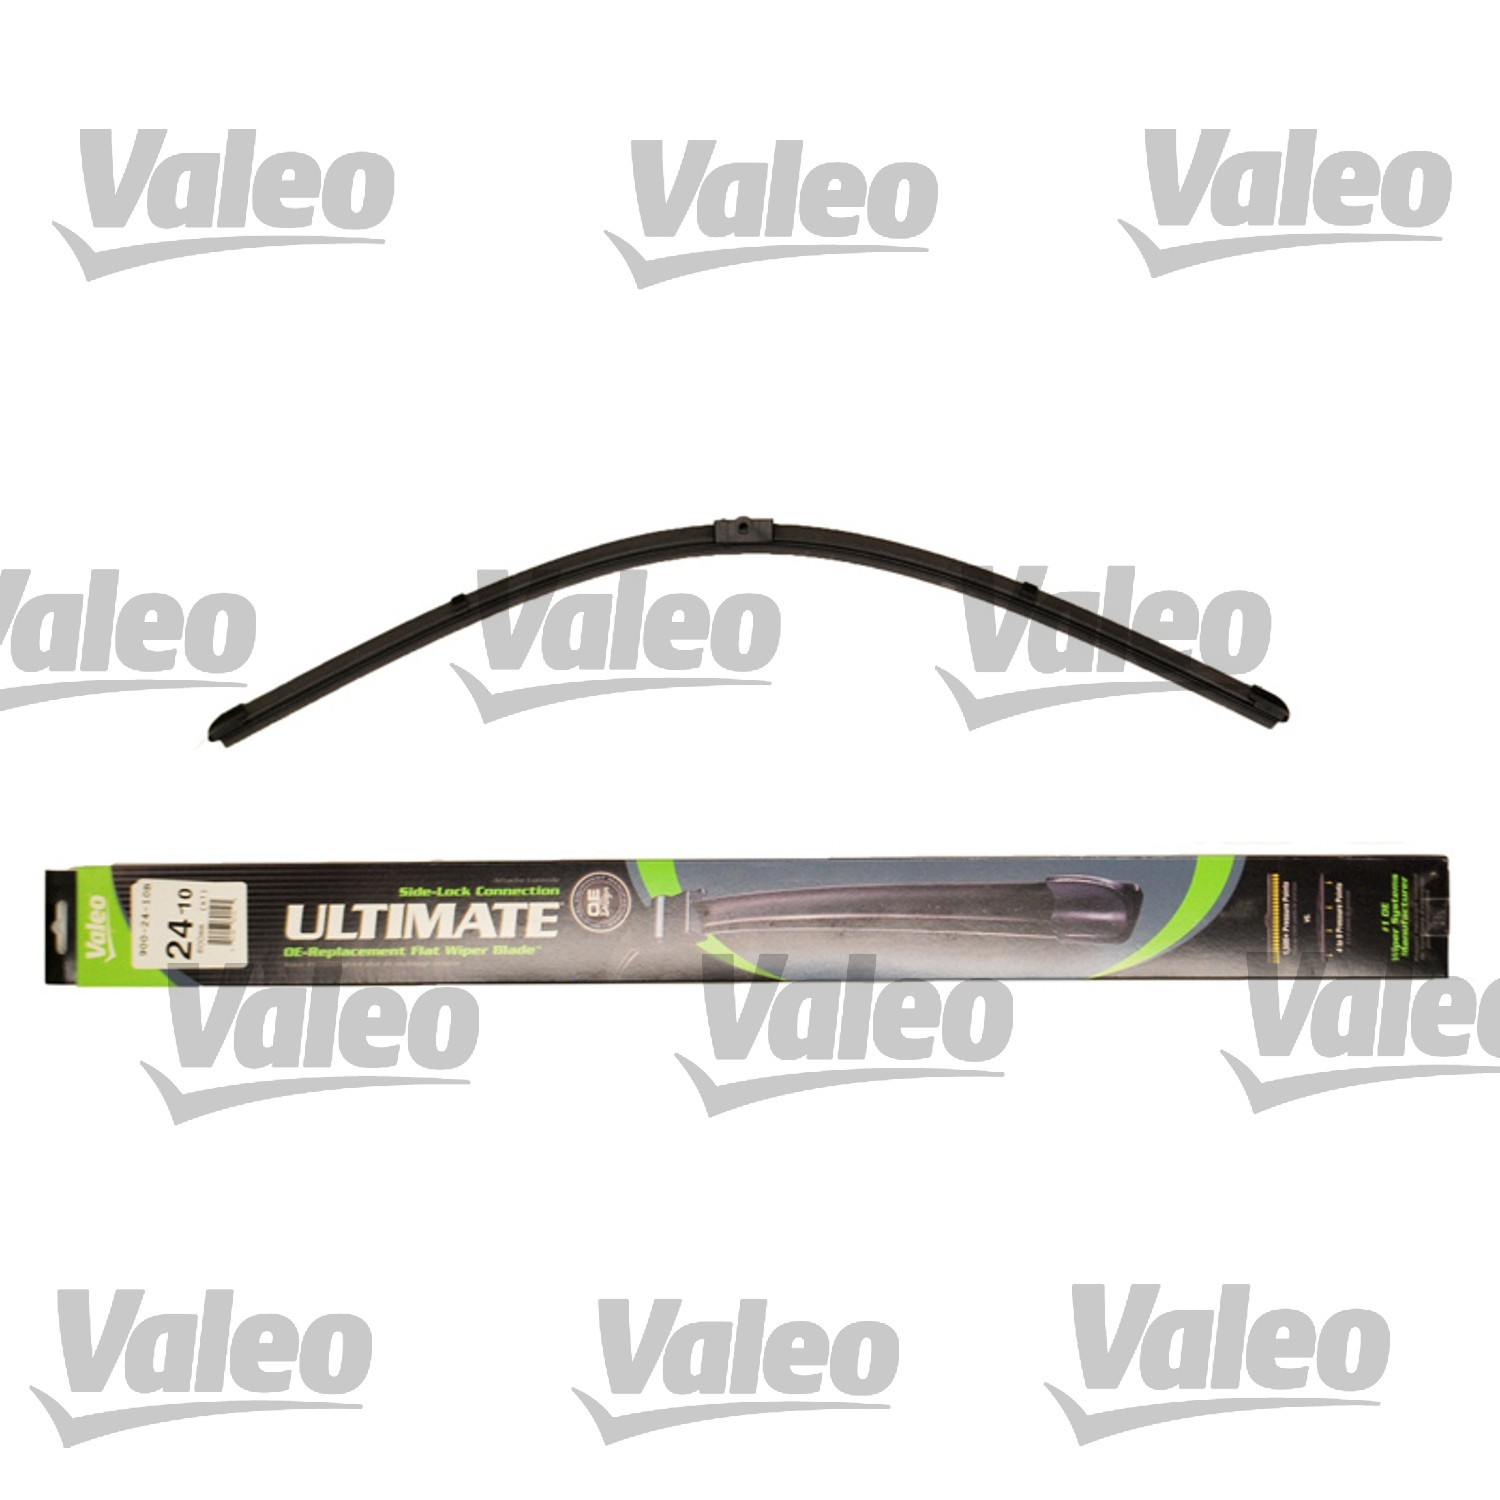 VALEO - Ultimate Wiper Blade Refill (Left) - VEO 900-24-10B